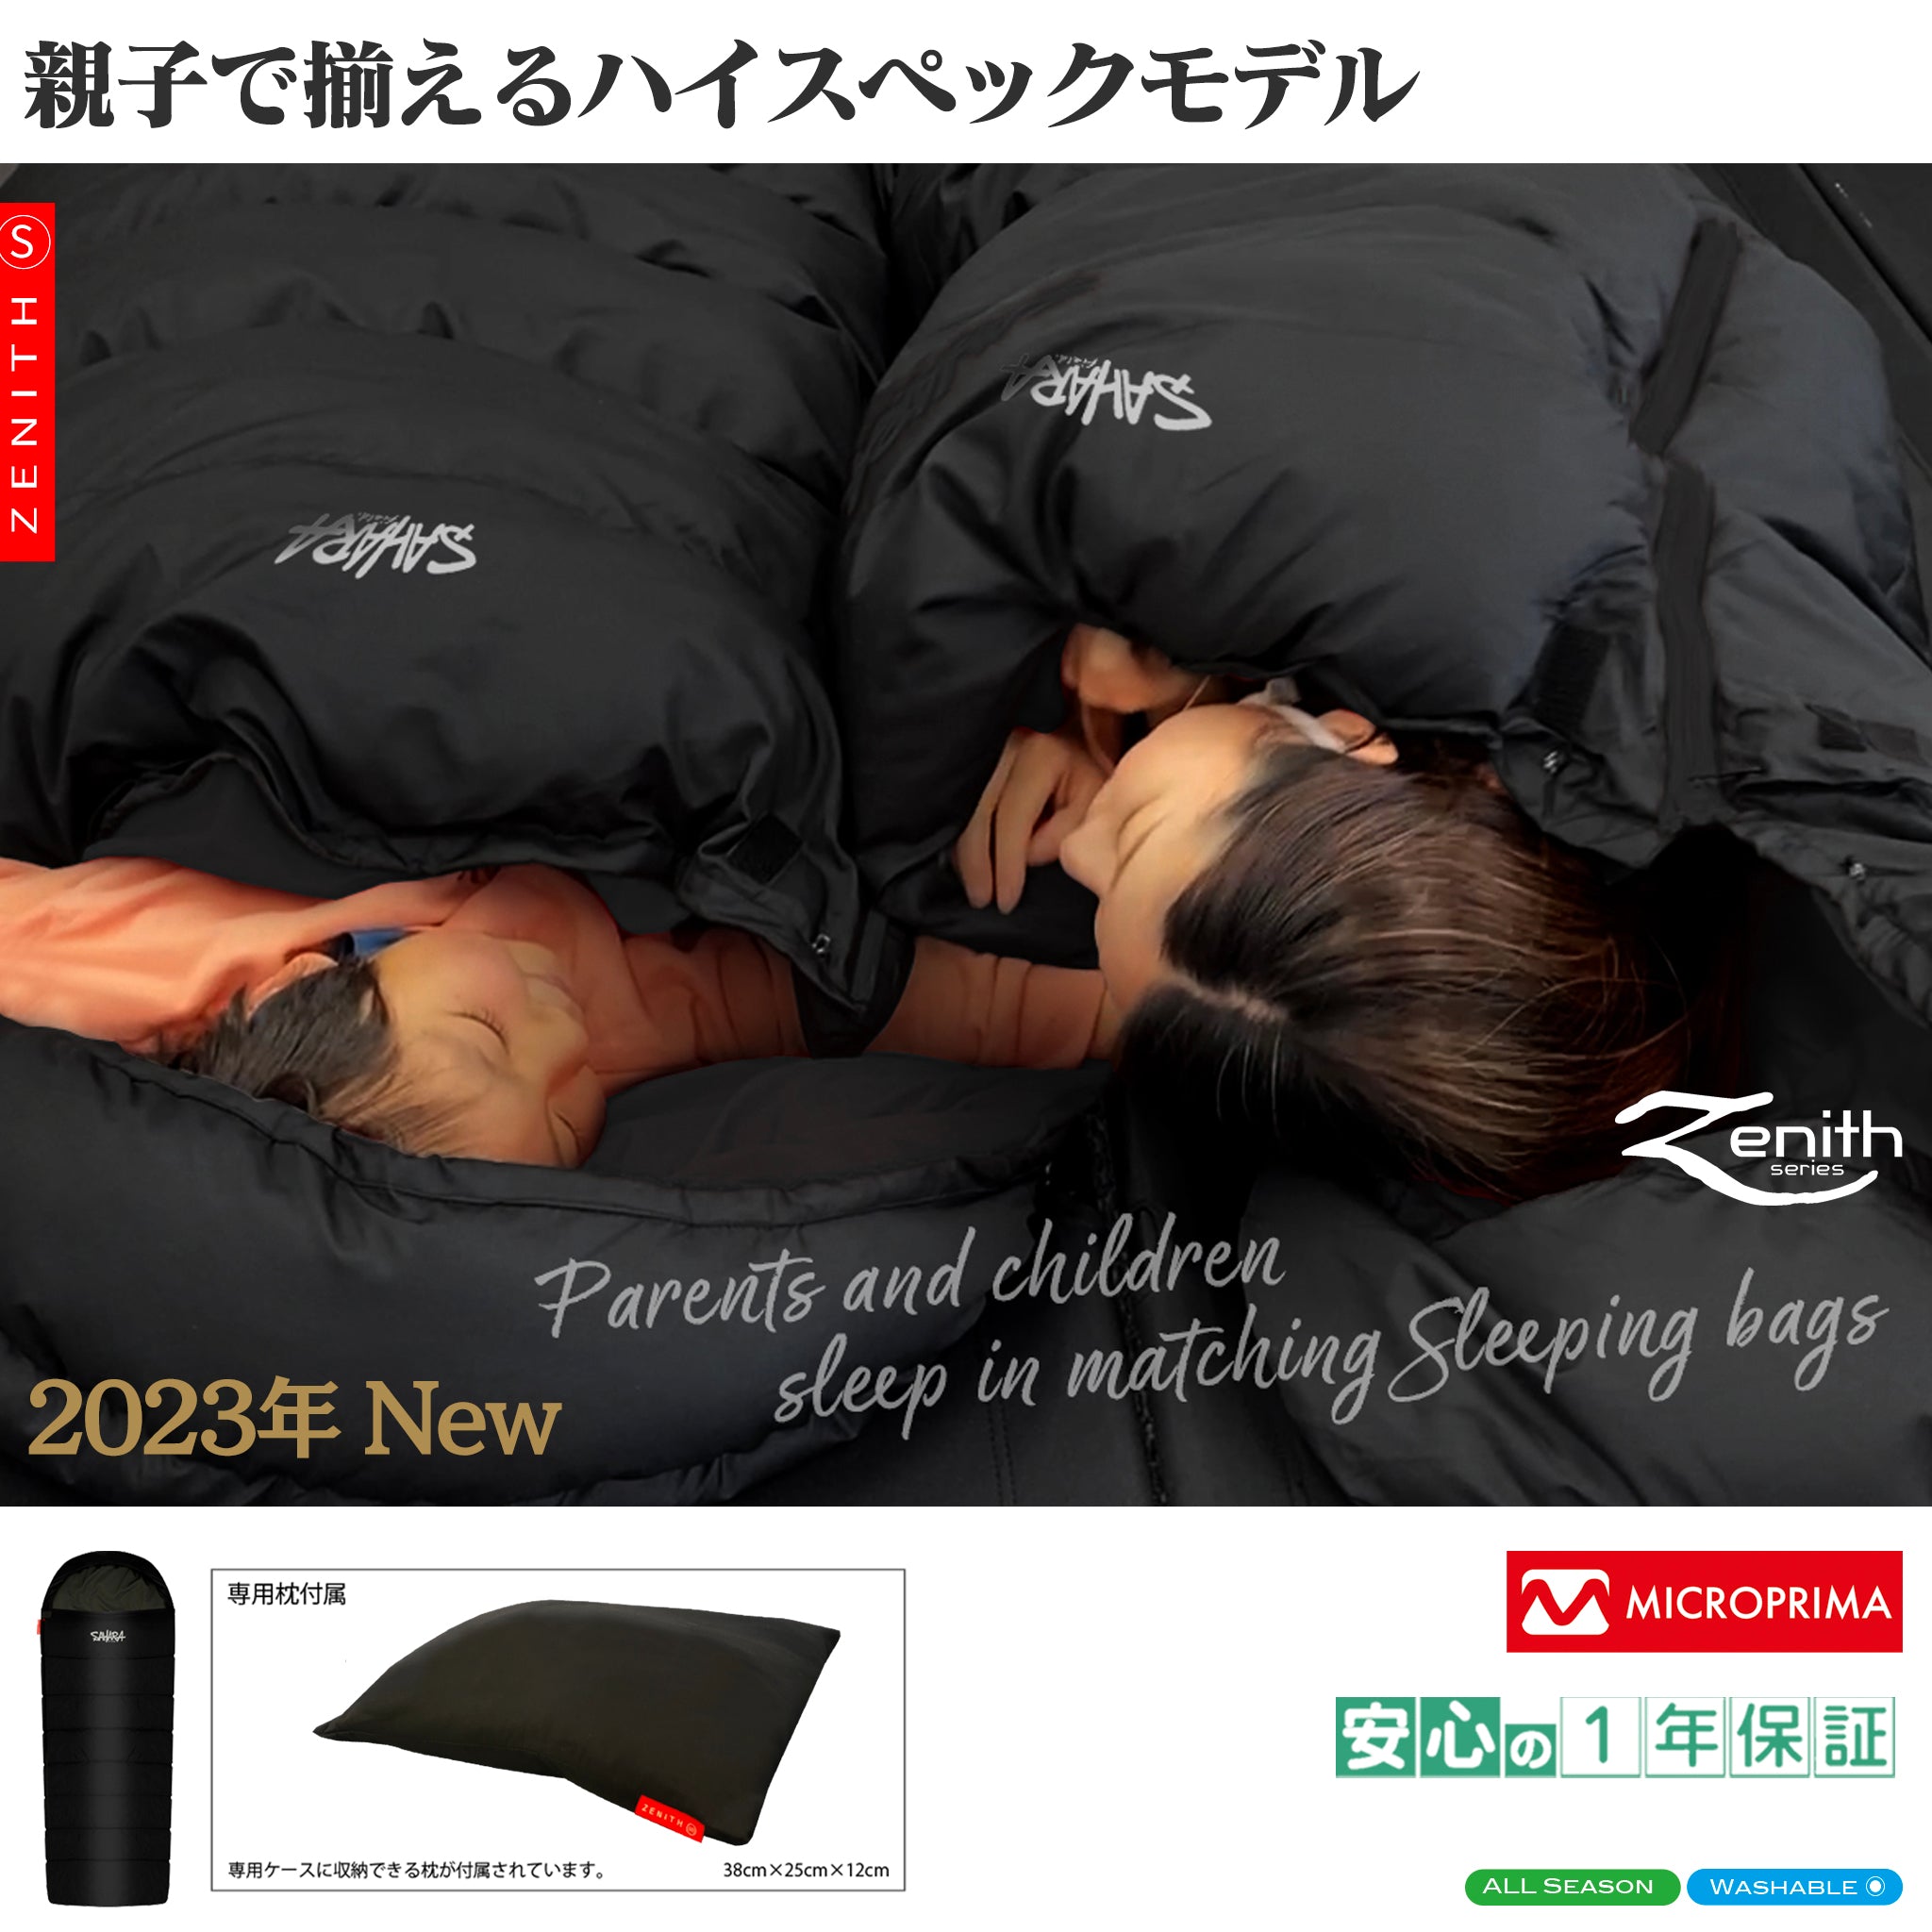 FieldSAHARA ZHK1500 キッズ寝袋 ハイブリッド型 枕付き 限界使用可能 